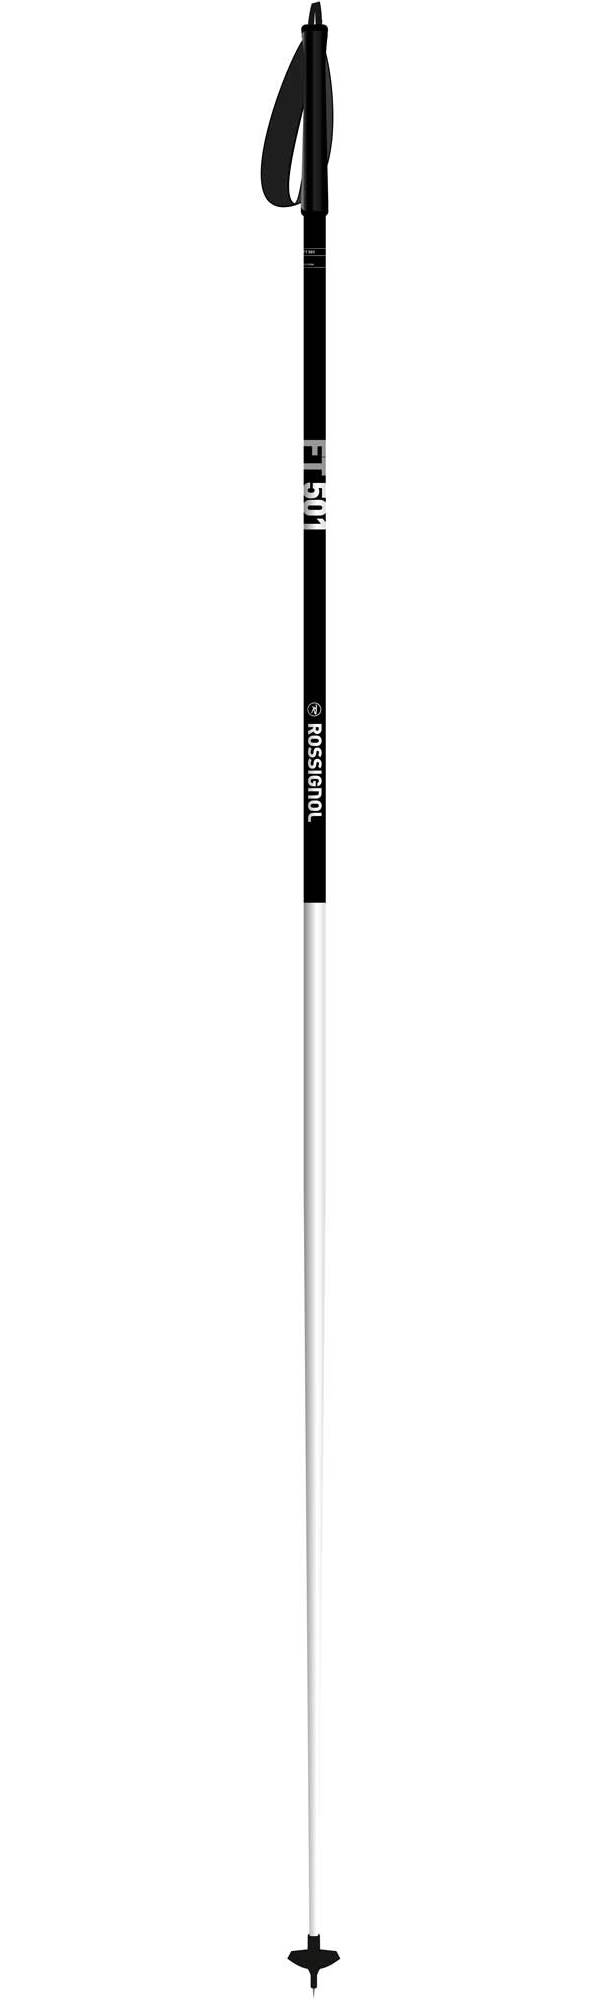 Rossignol Junior FT 501 Cross Country Ski Poles product image